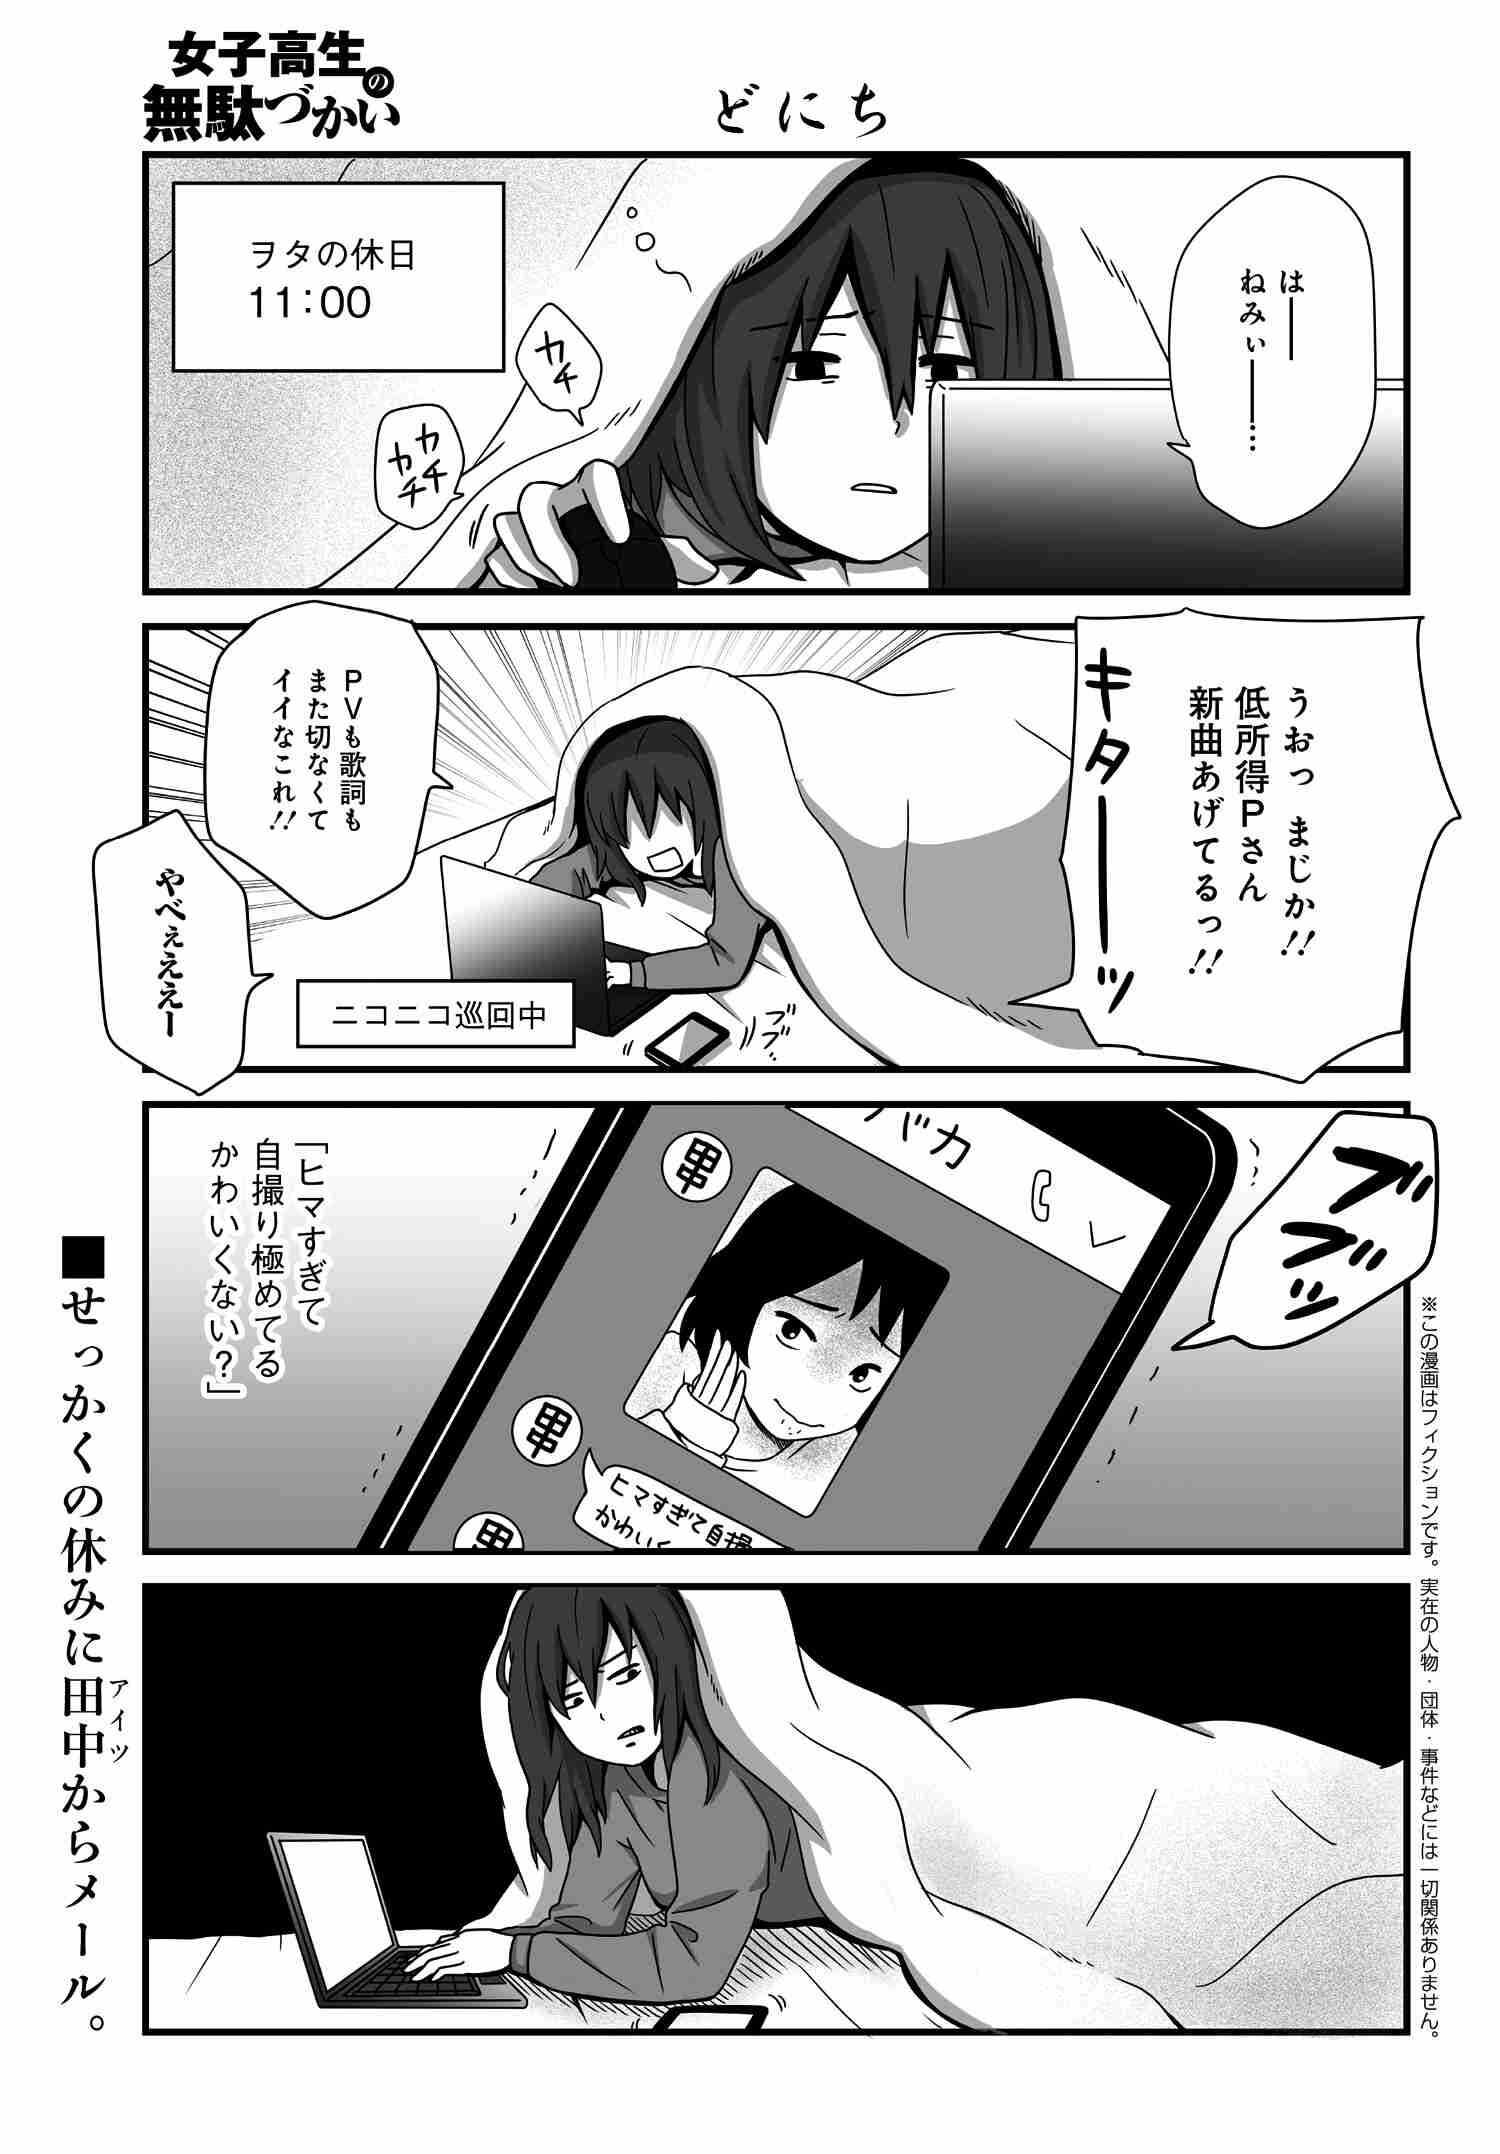 Joshikousei no Mudazukai - Chapter 003 - Page 1